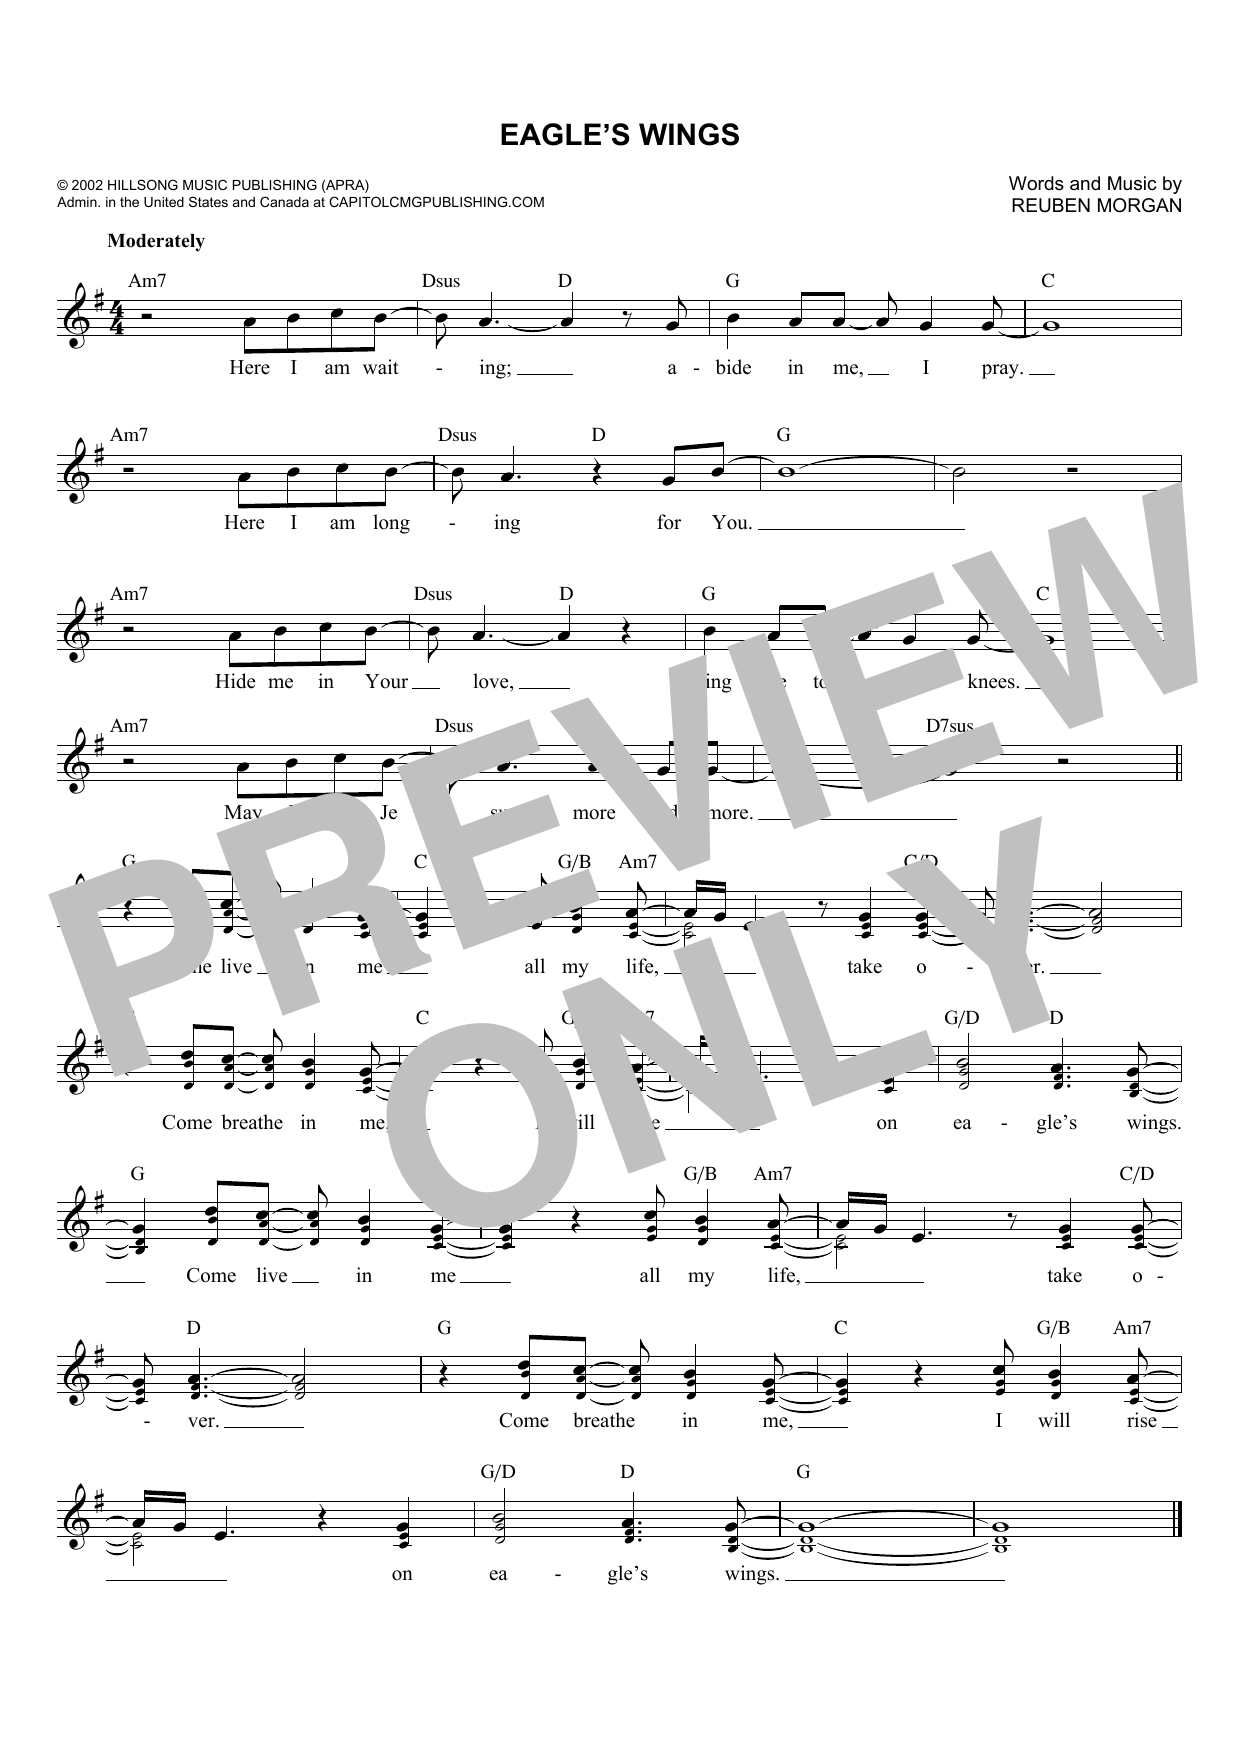 Katinas Eagle's Wings Sheet Music Notes & Chords for Melody Line, Lyrics & Chords - Download or Print PDF